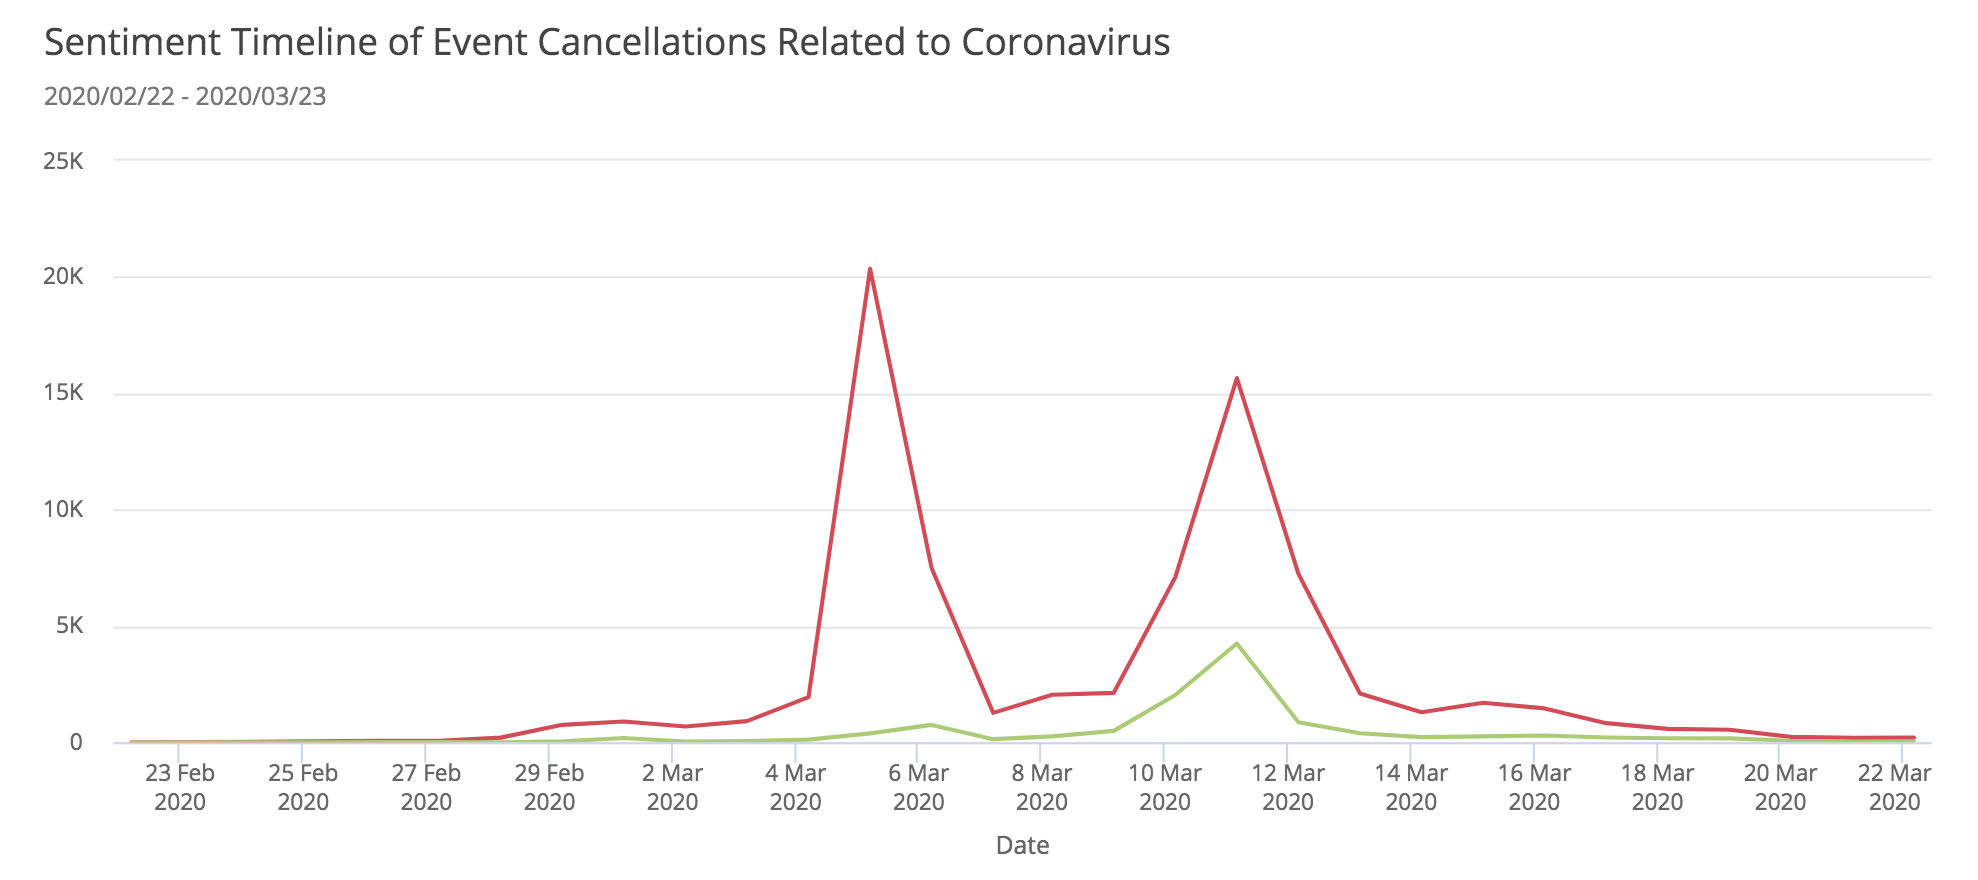 pr-crisis-coronavirus-sentiment-timeline-event-cancellations